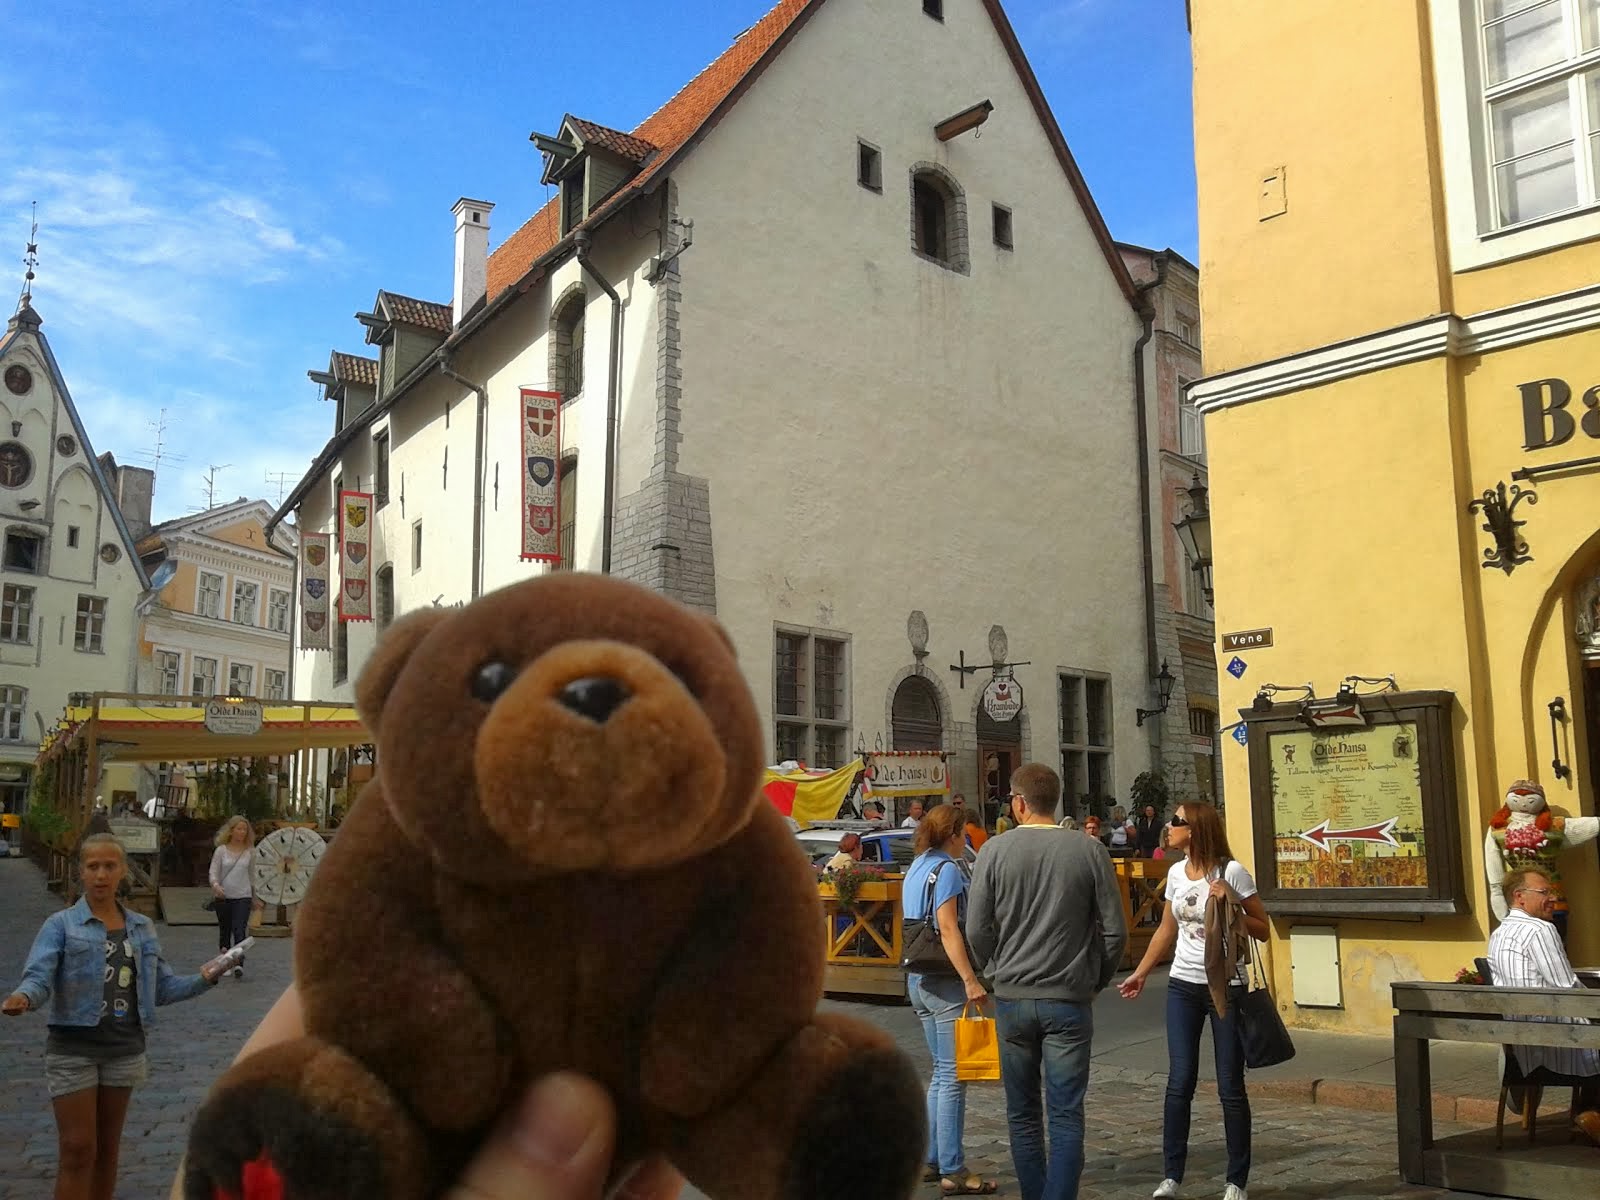 Teddy Bear in Tallinn, Estonia